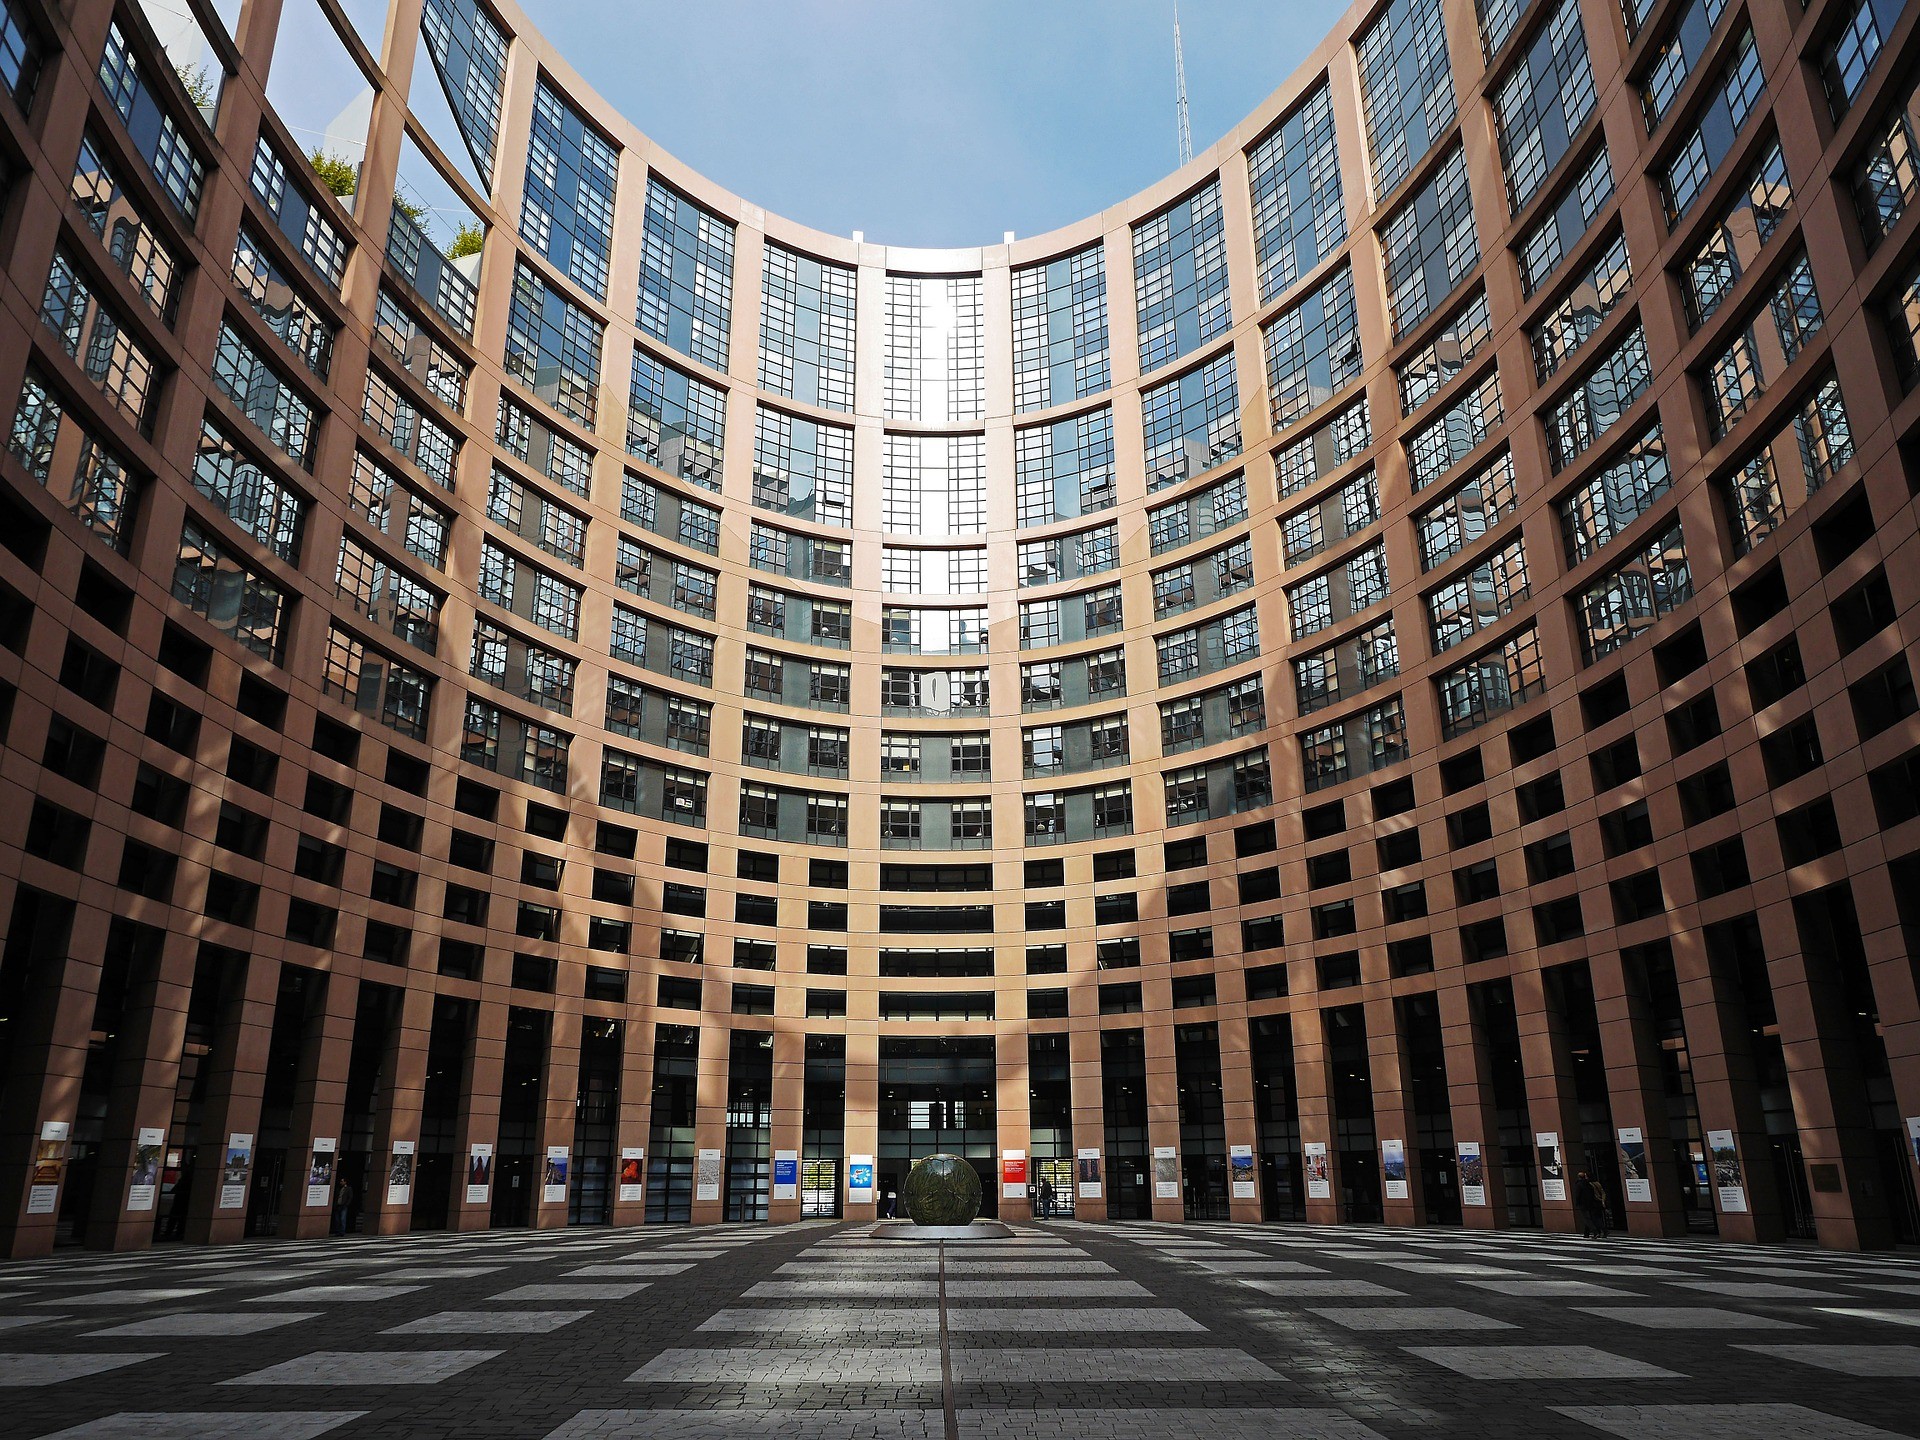 Europski parlamet/Pixabay